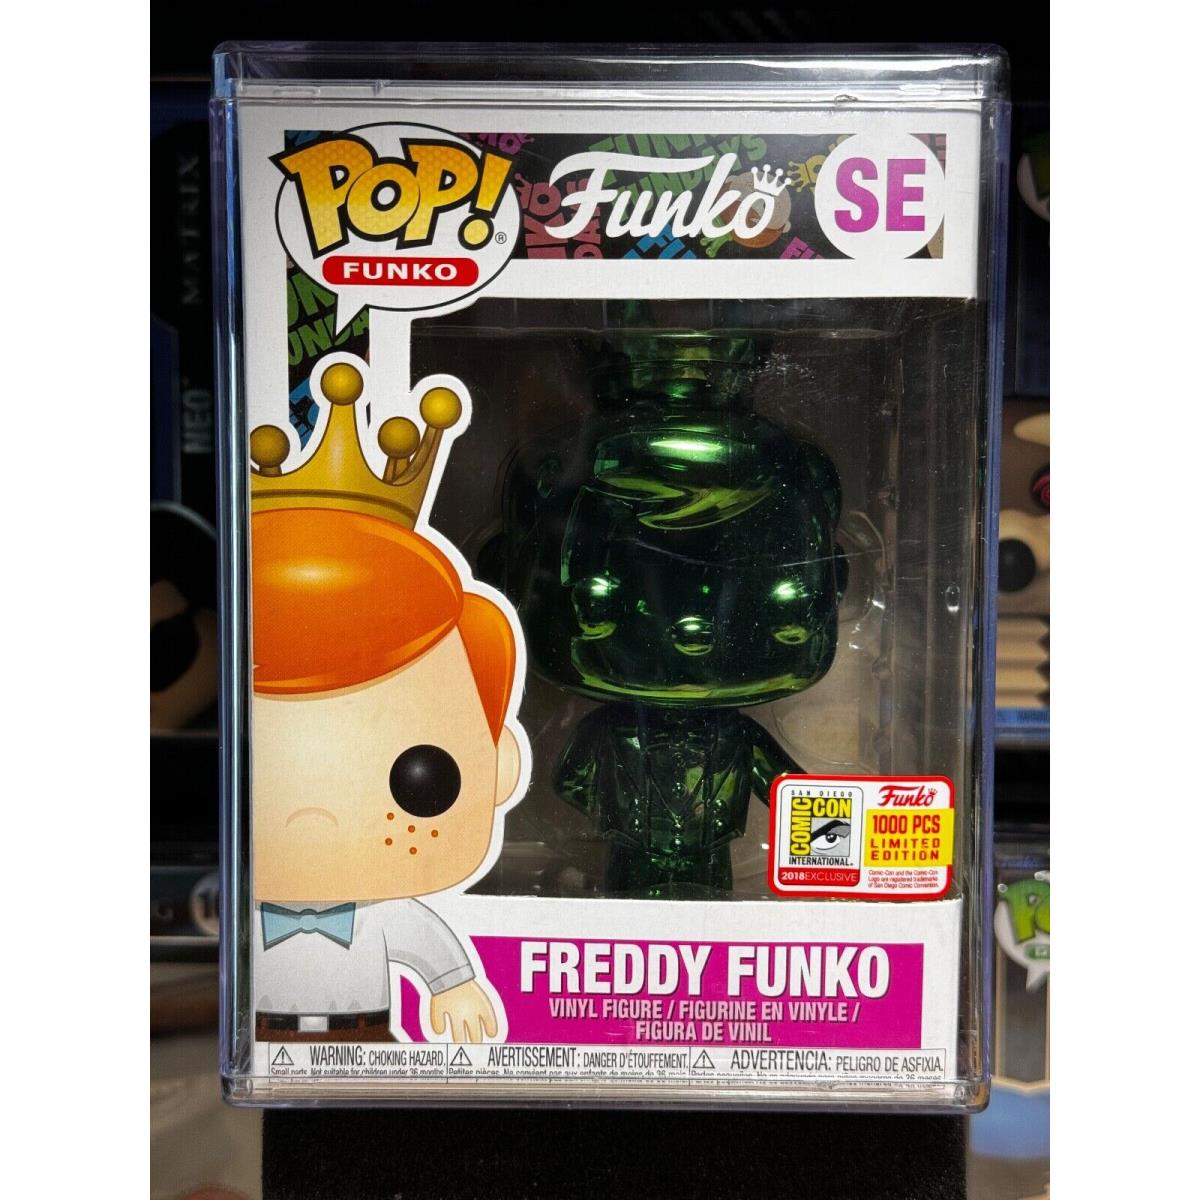 Funko Pop Vinyl: Freddy Funko - Green Tuxedo SE w/ Hardstack